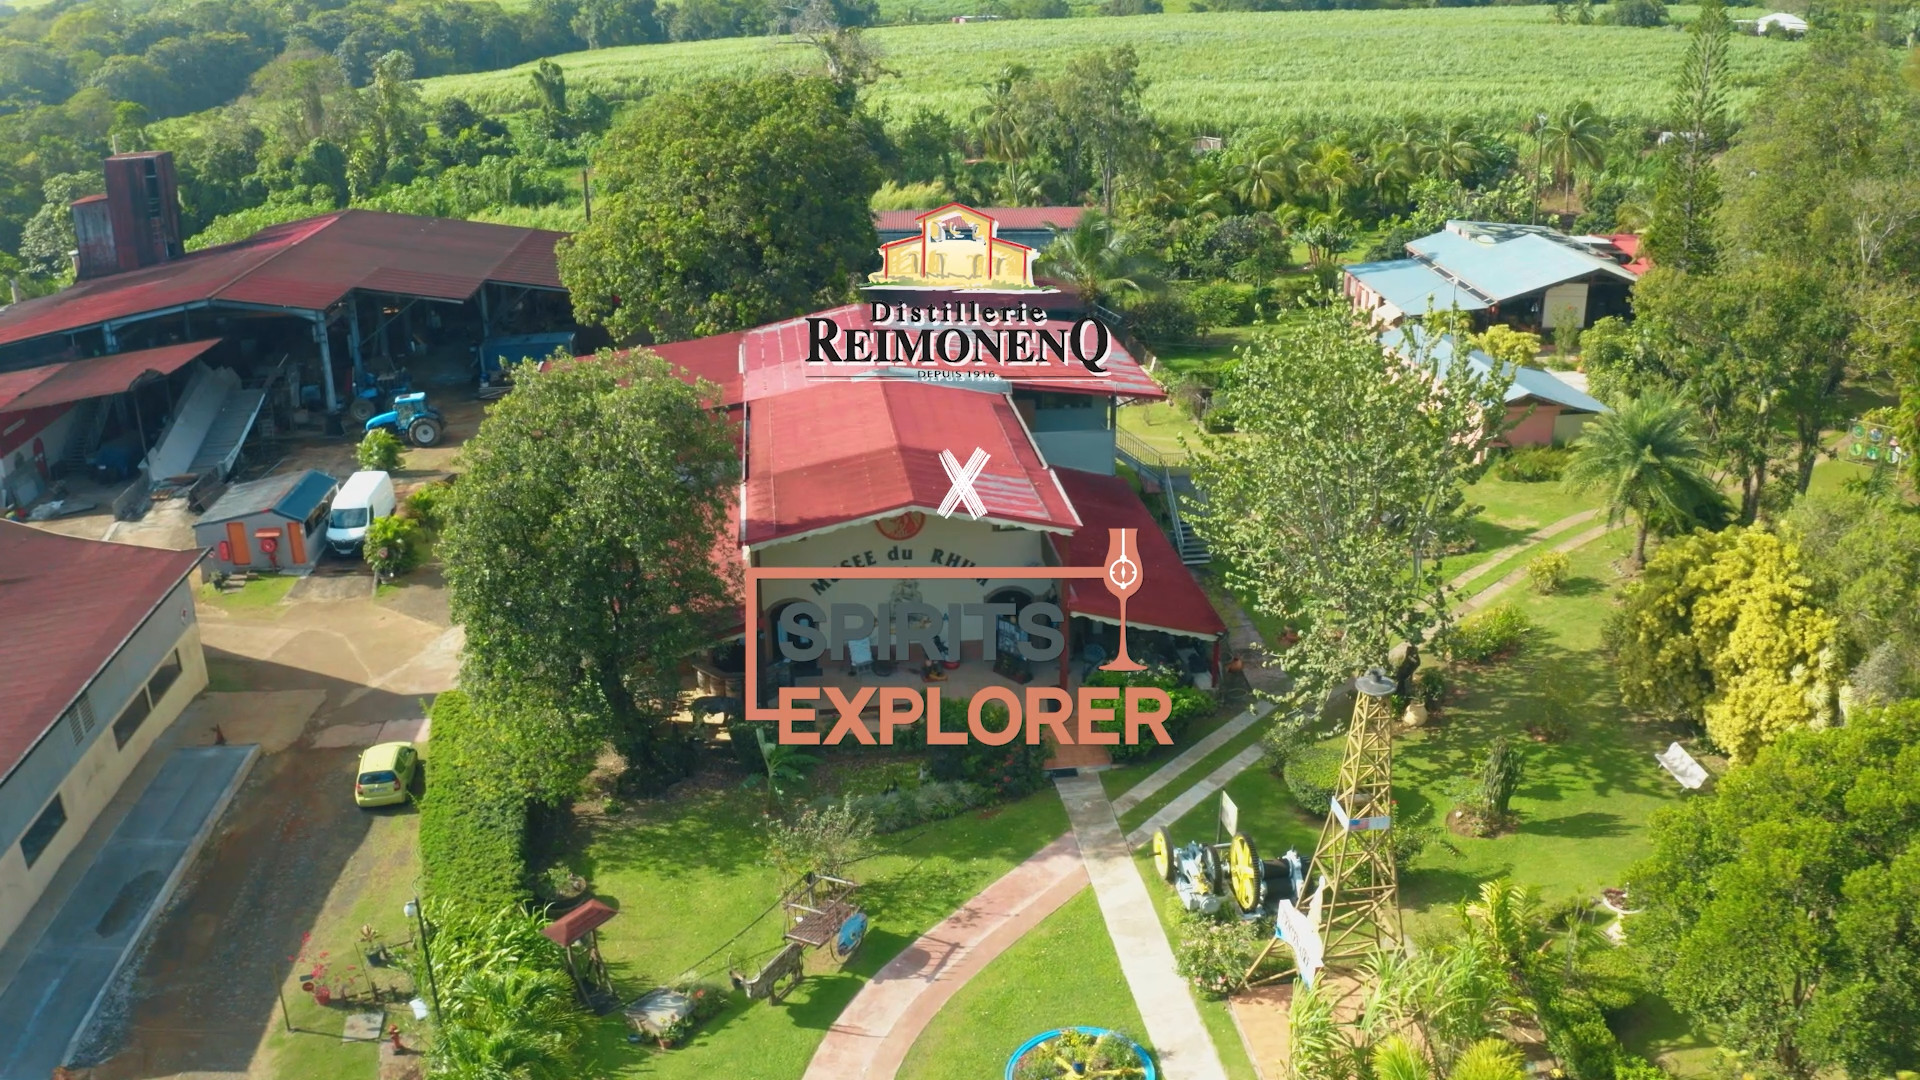 Spirits Explorer en Guadeloupe Épisode 8 – Distillerie Reimonenq